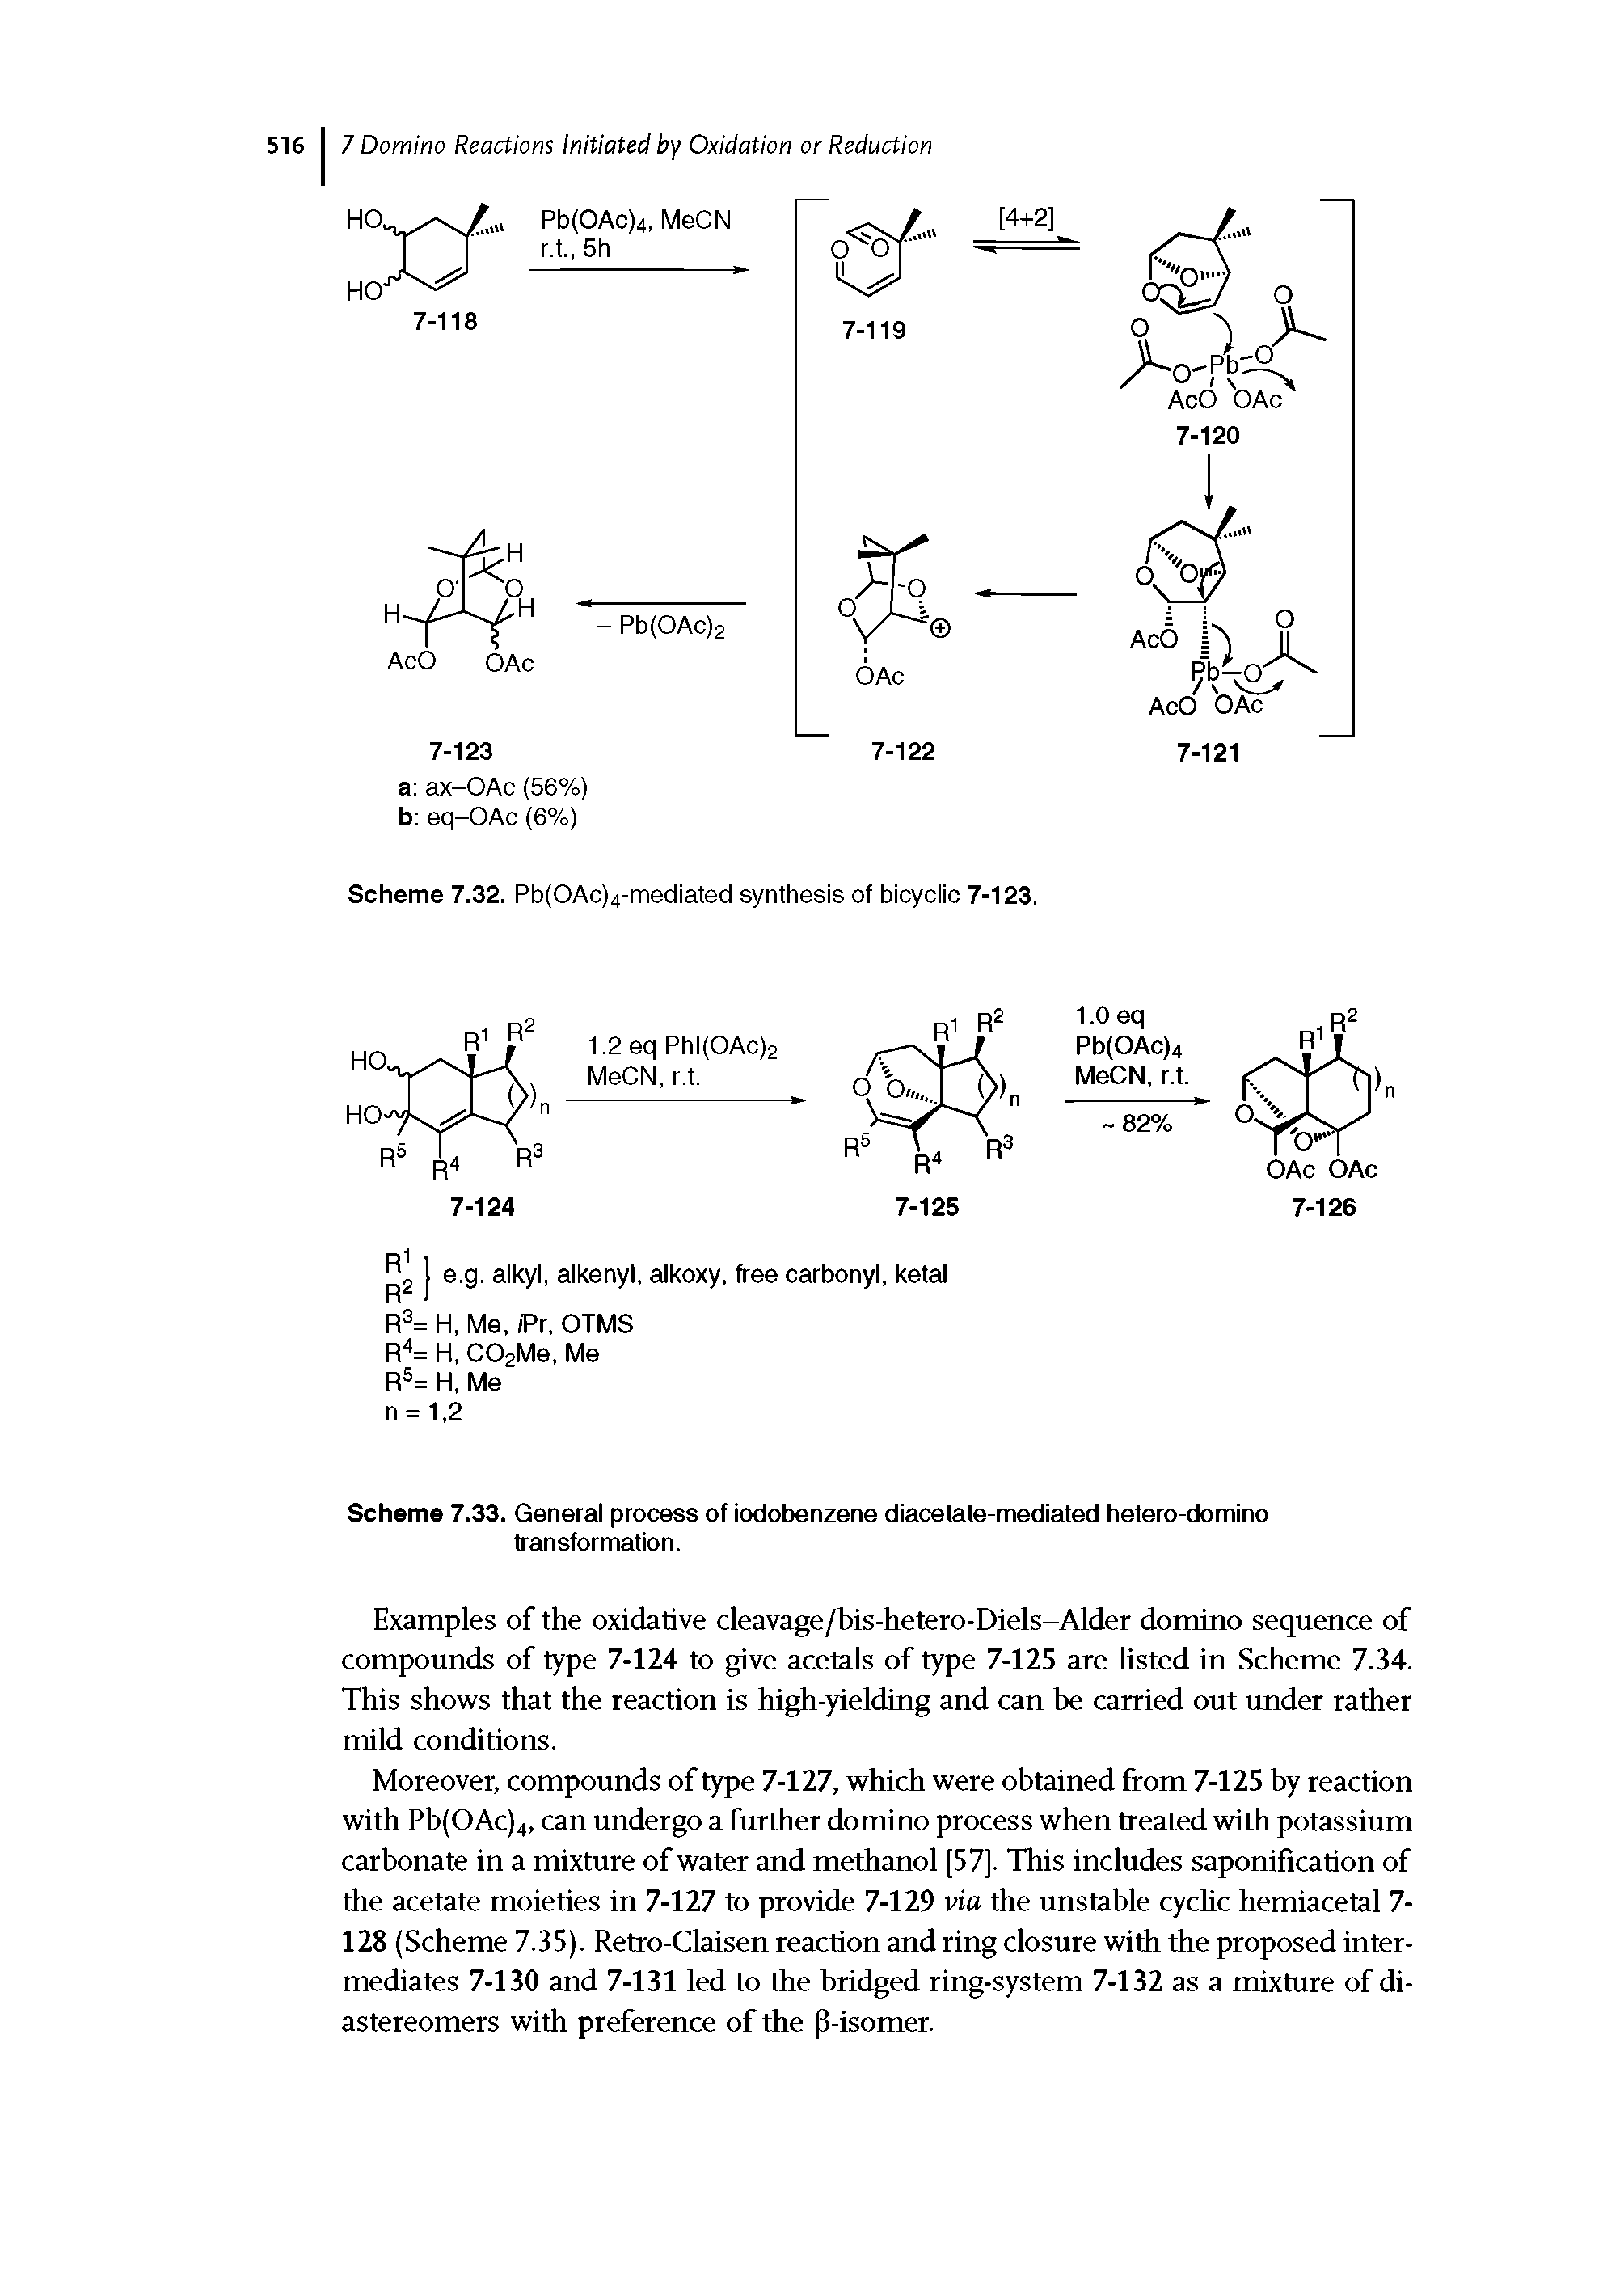 Scheme 7.33. General process of iodobenzene diacetate-mediated hetero-domino transformation.